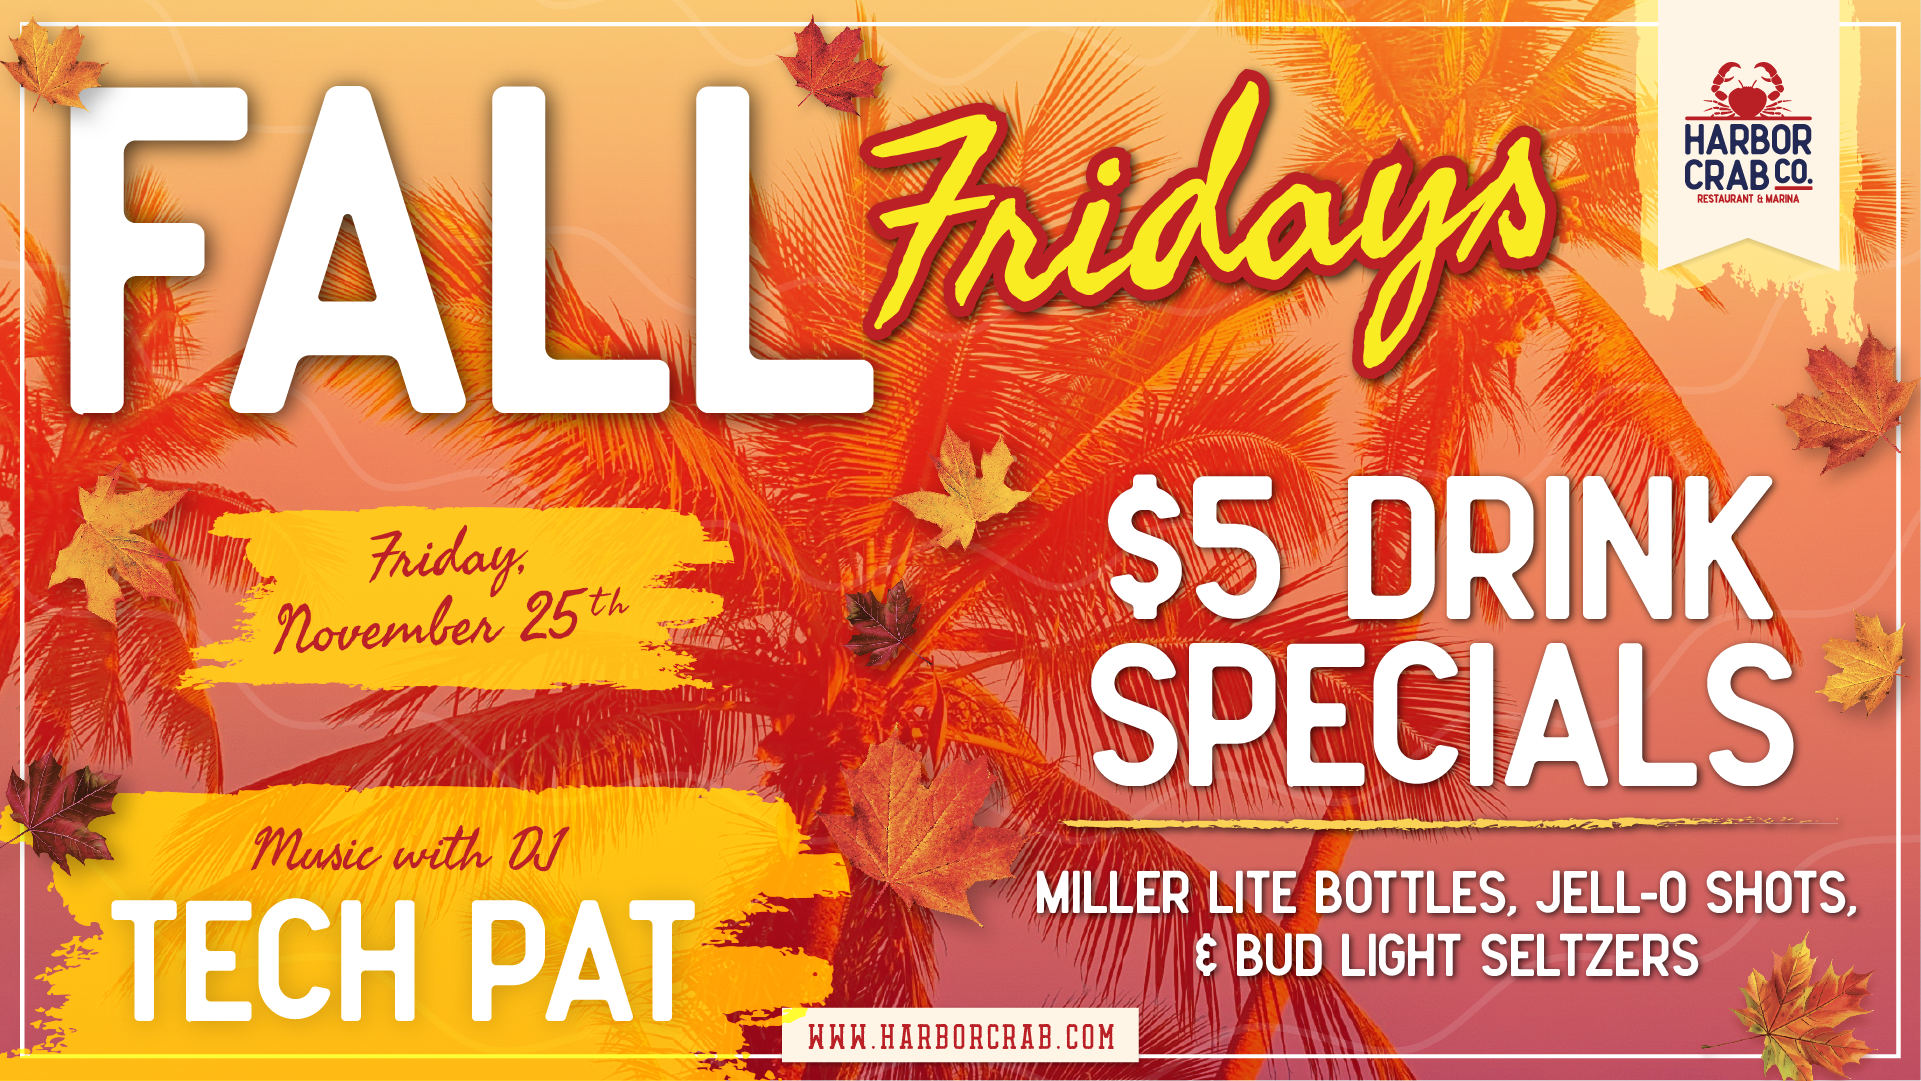 Fall Friday with DJ Tech Pat on November 25th